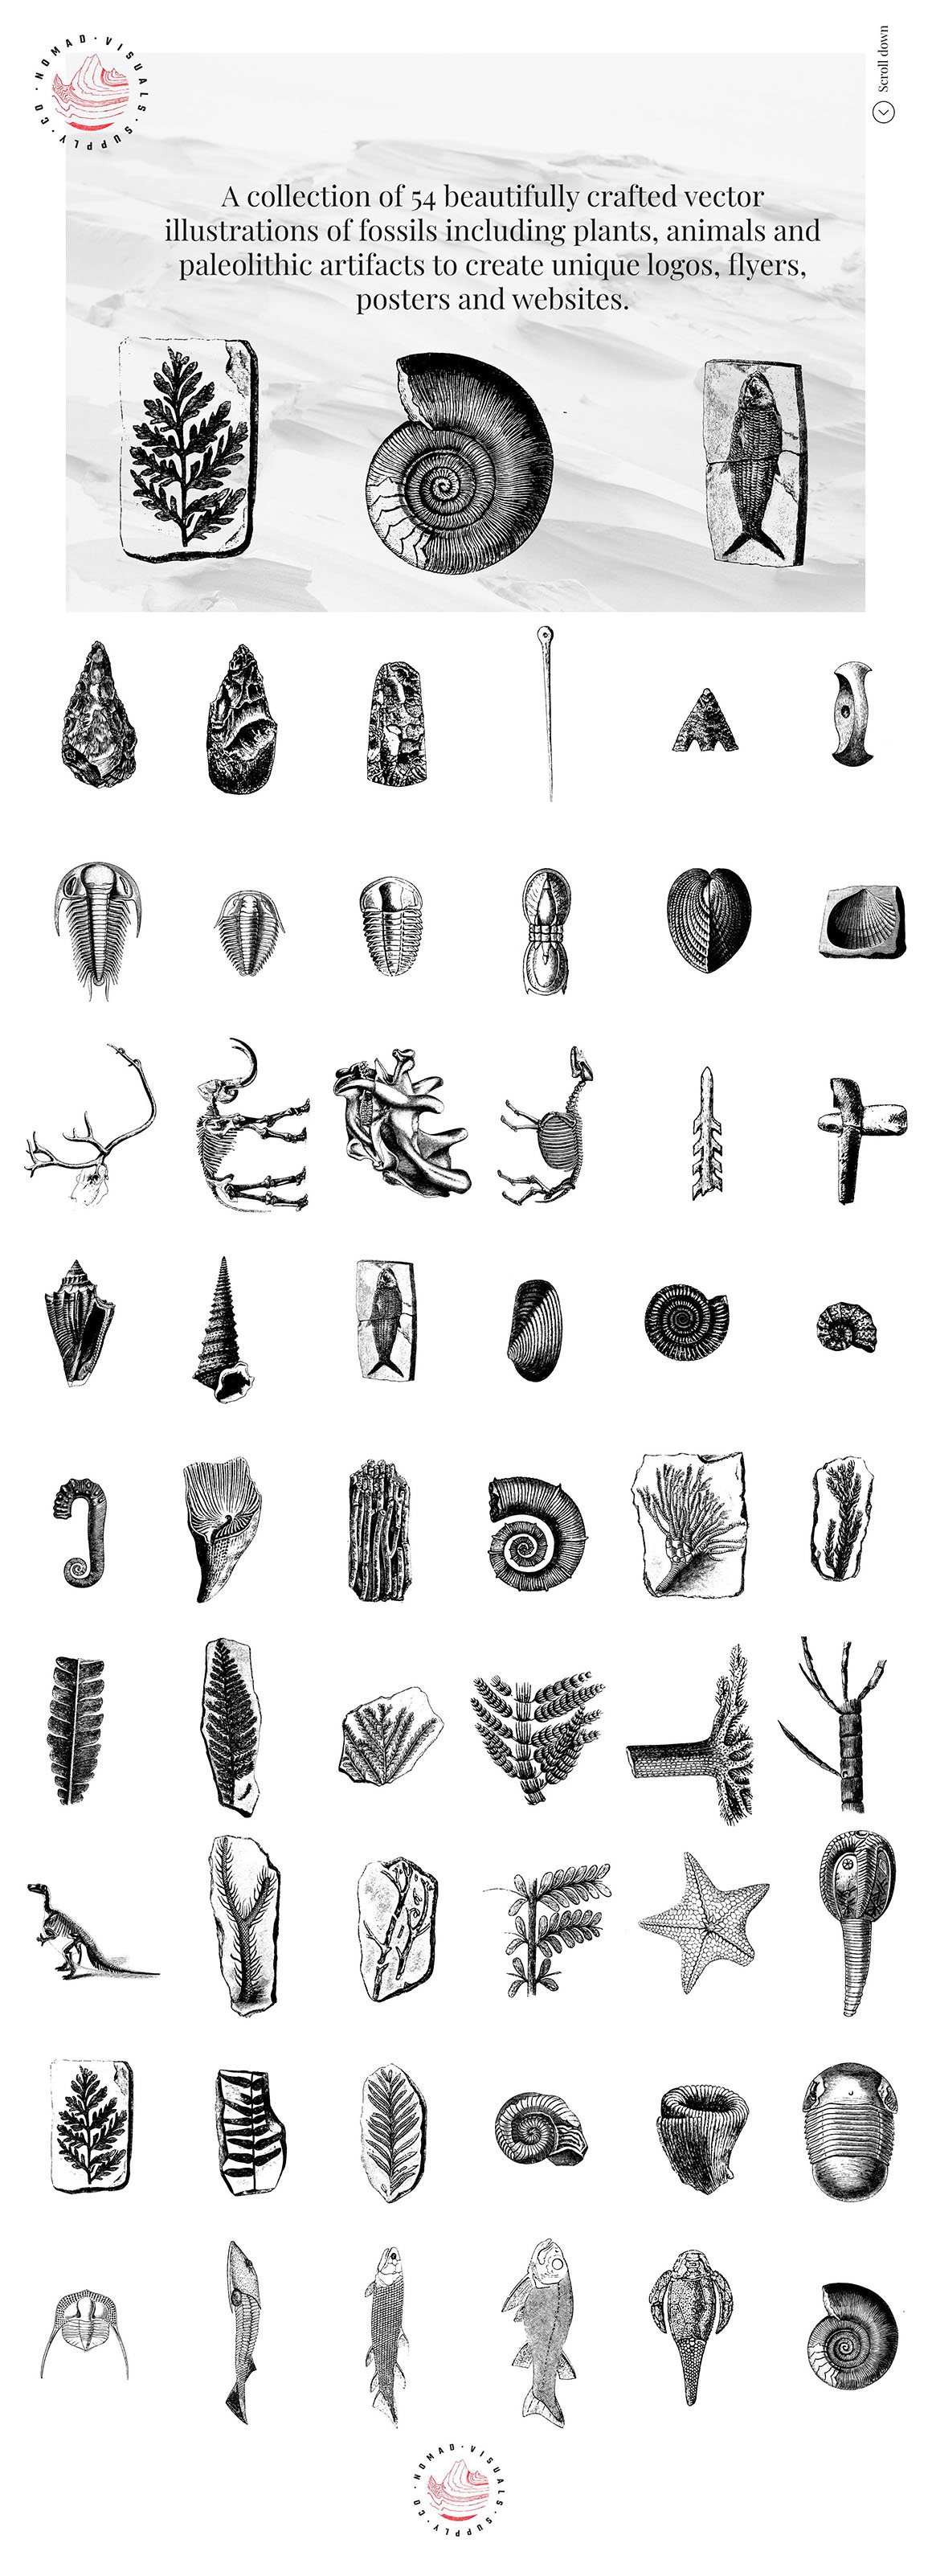 Fossils Illustrations